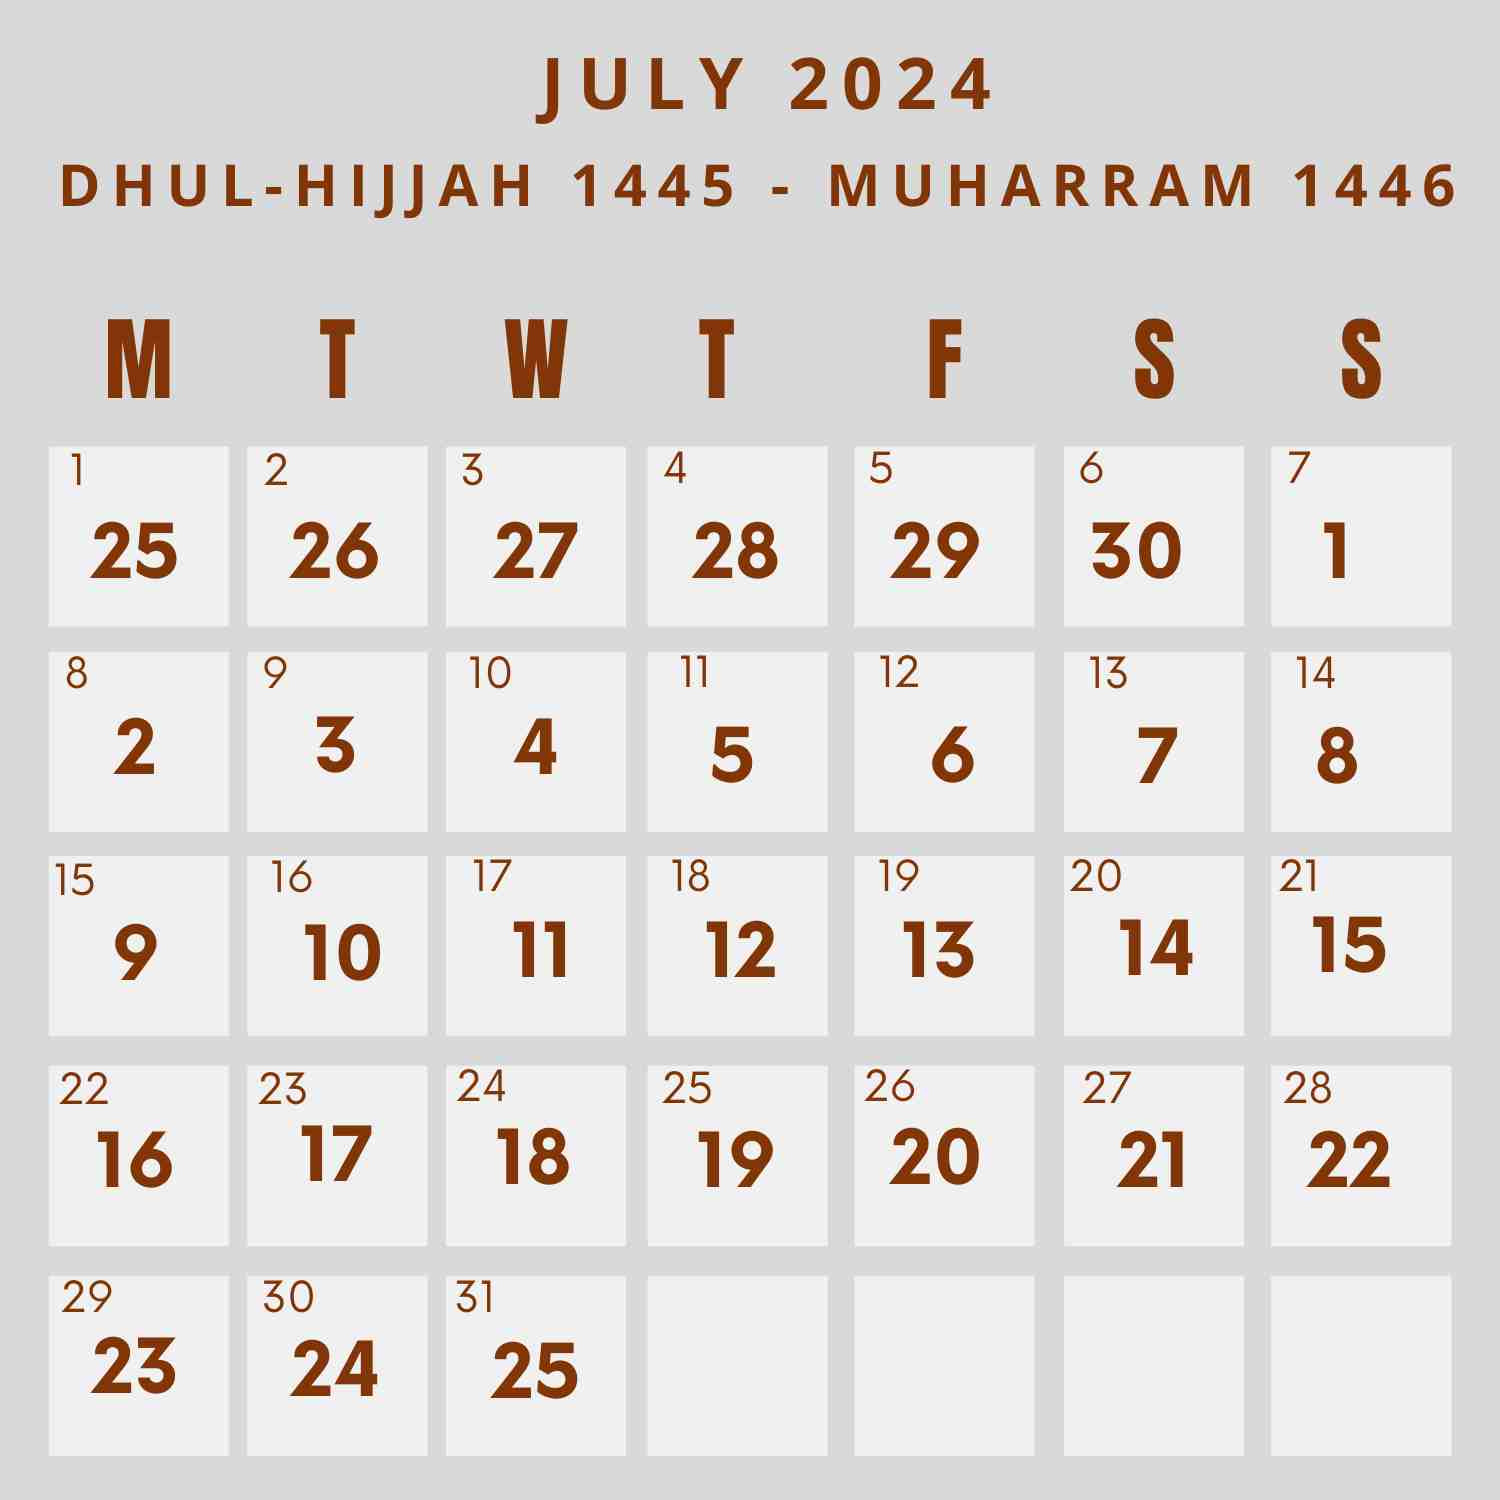 Islamic Calendar 2024 - Khwajadarbar throughout 11 July 2024 in Islamic Calendar